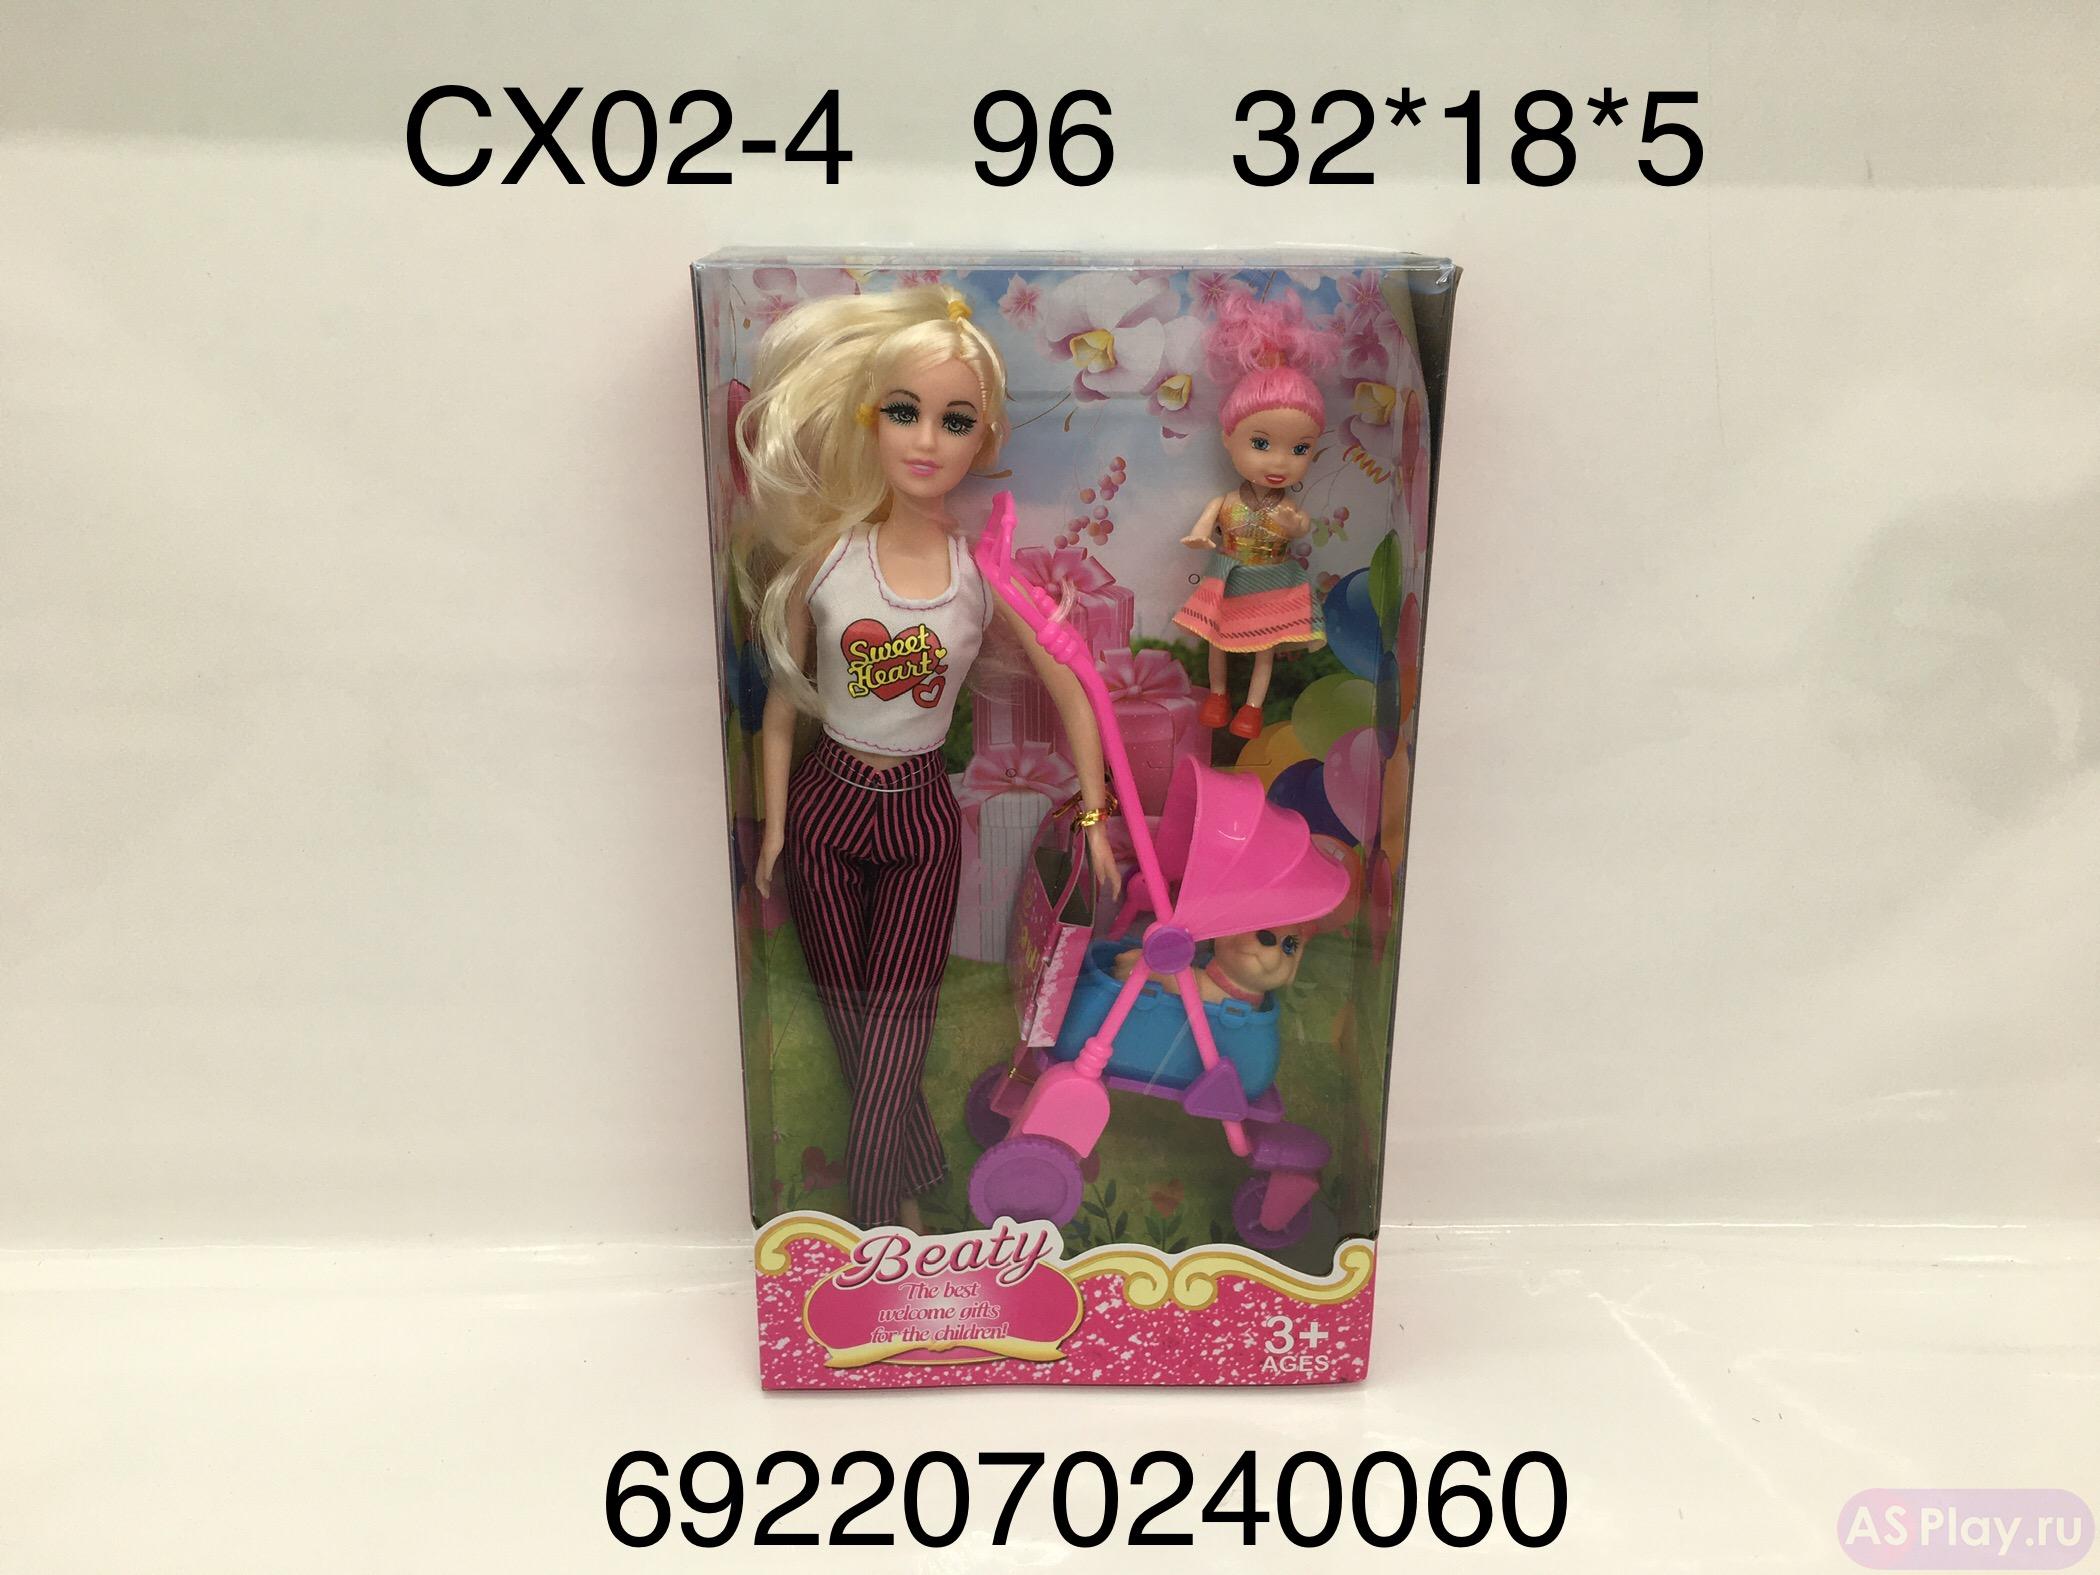 CX02-4 Кукла с ребенком и коляской 96 шт в кор. CX02-4